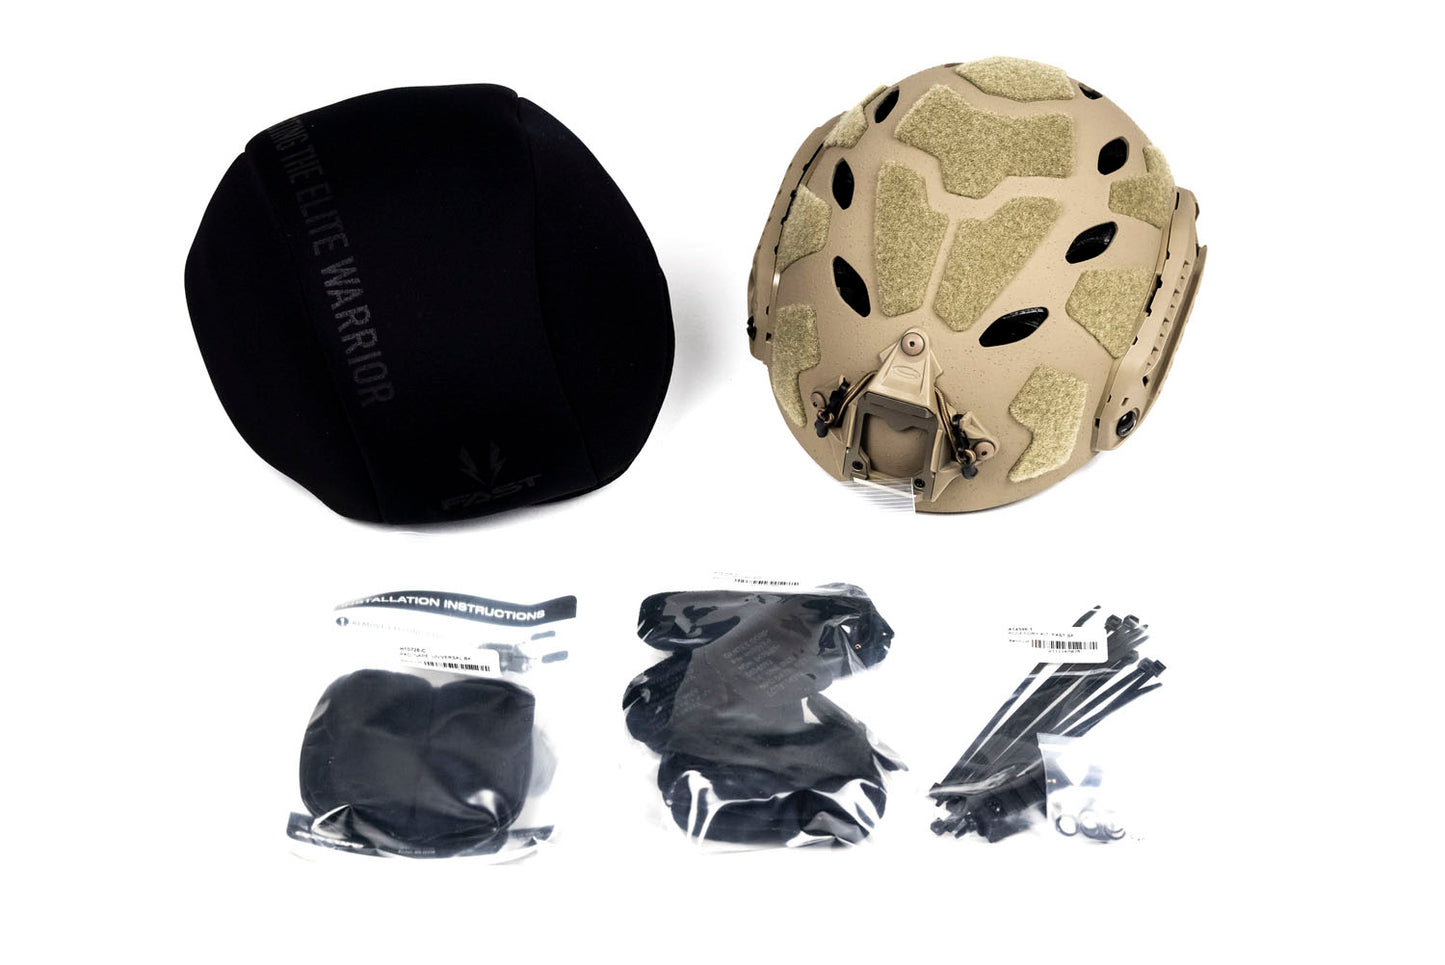 Ops-Core FAST SF Carbon Helmet